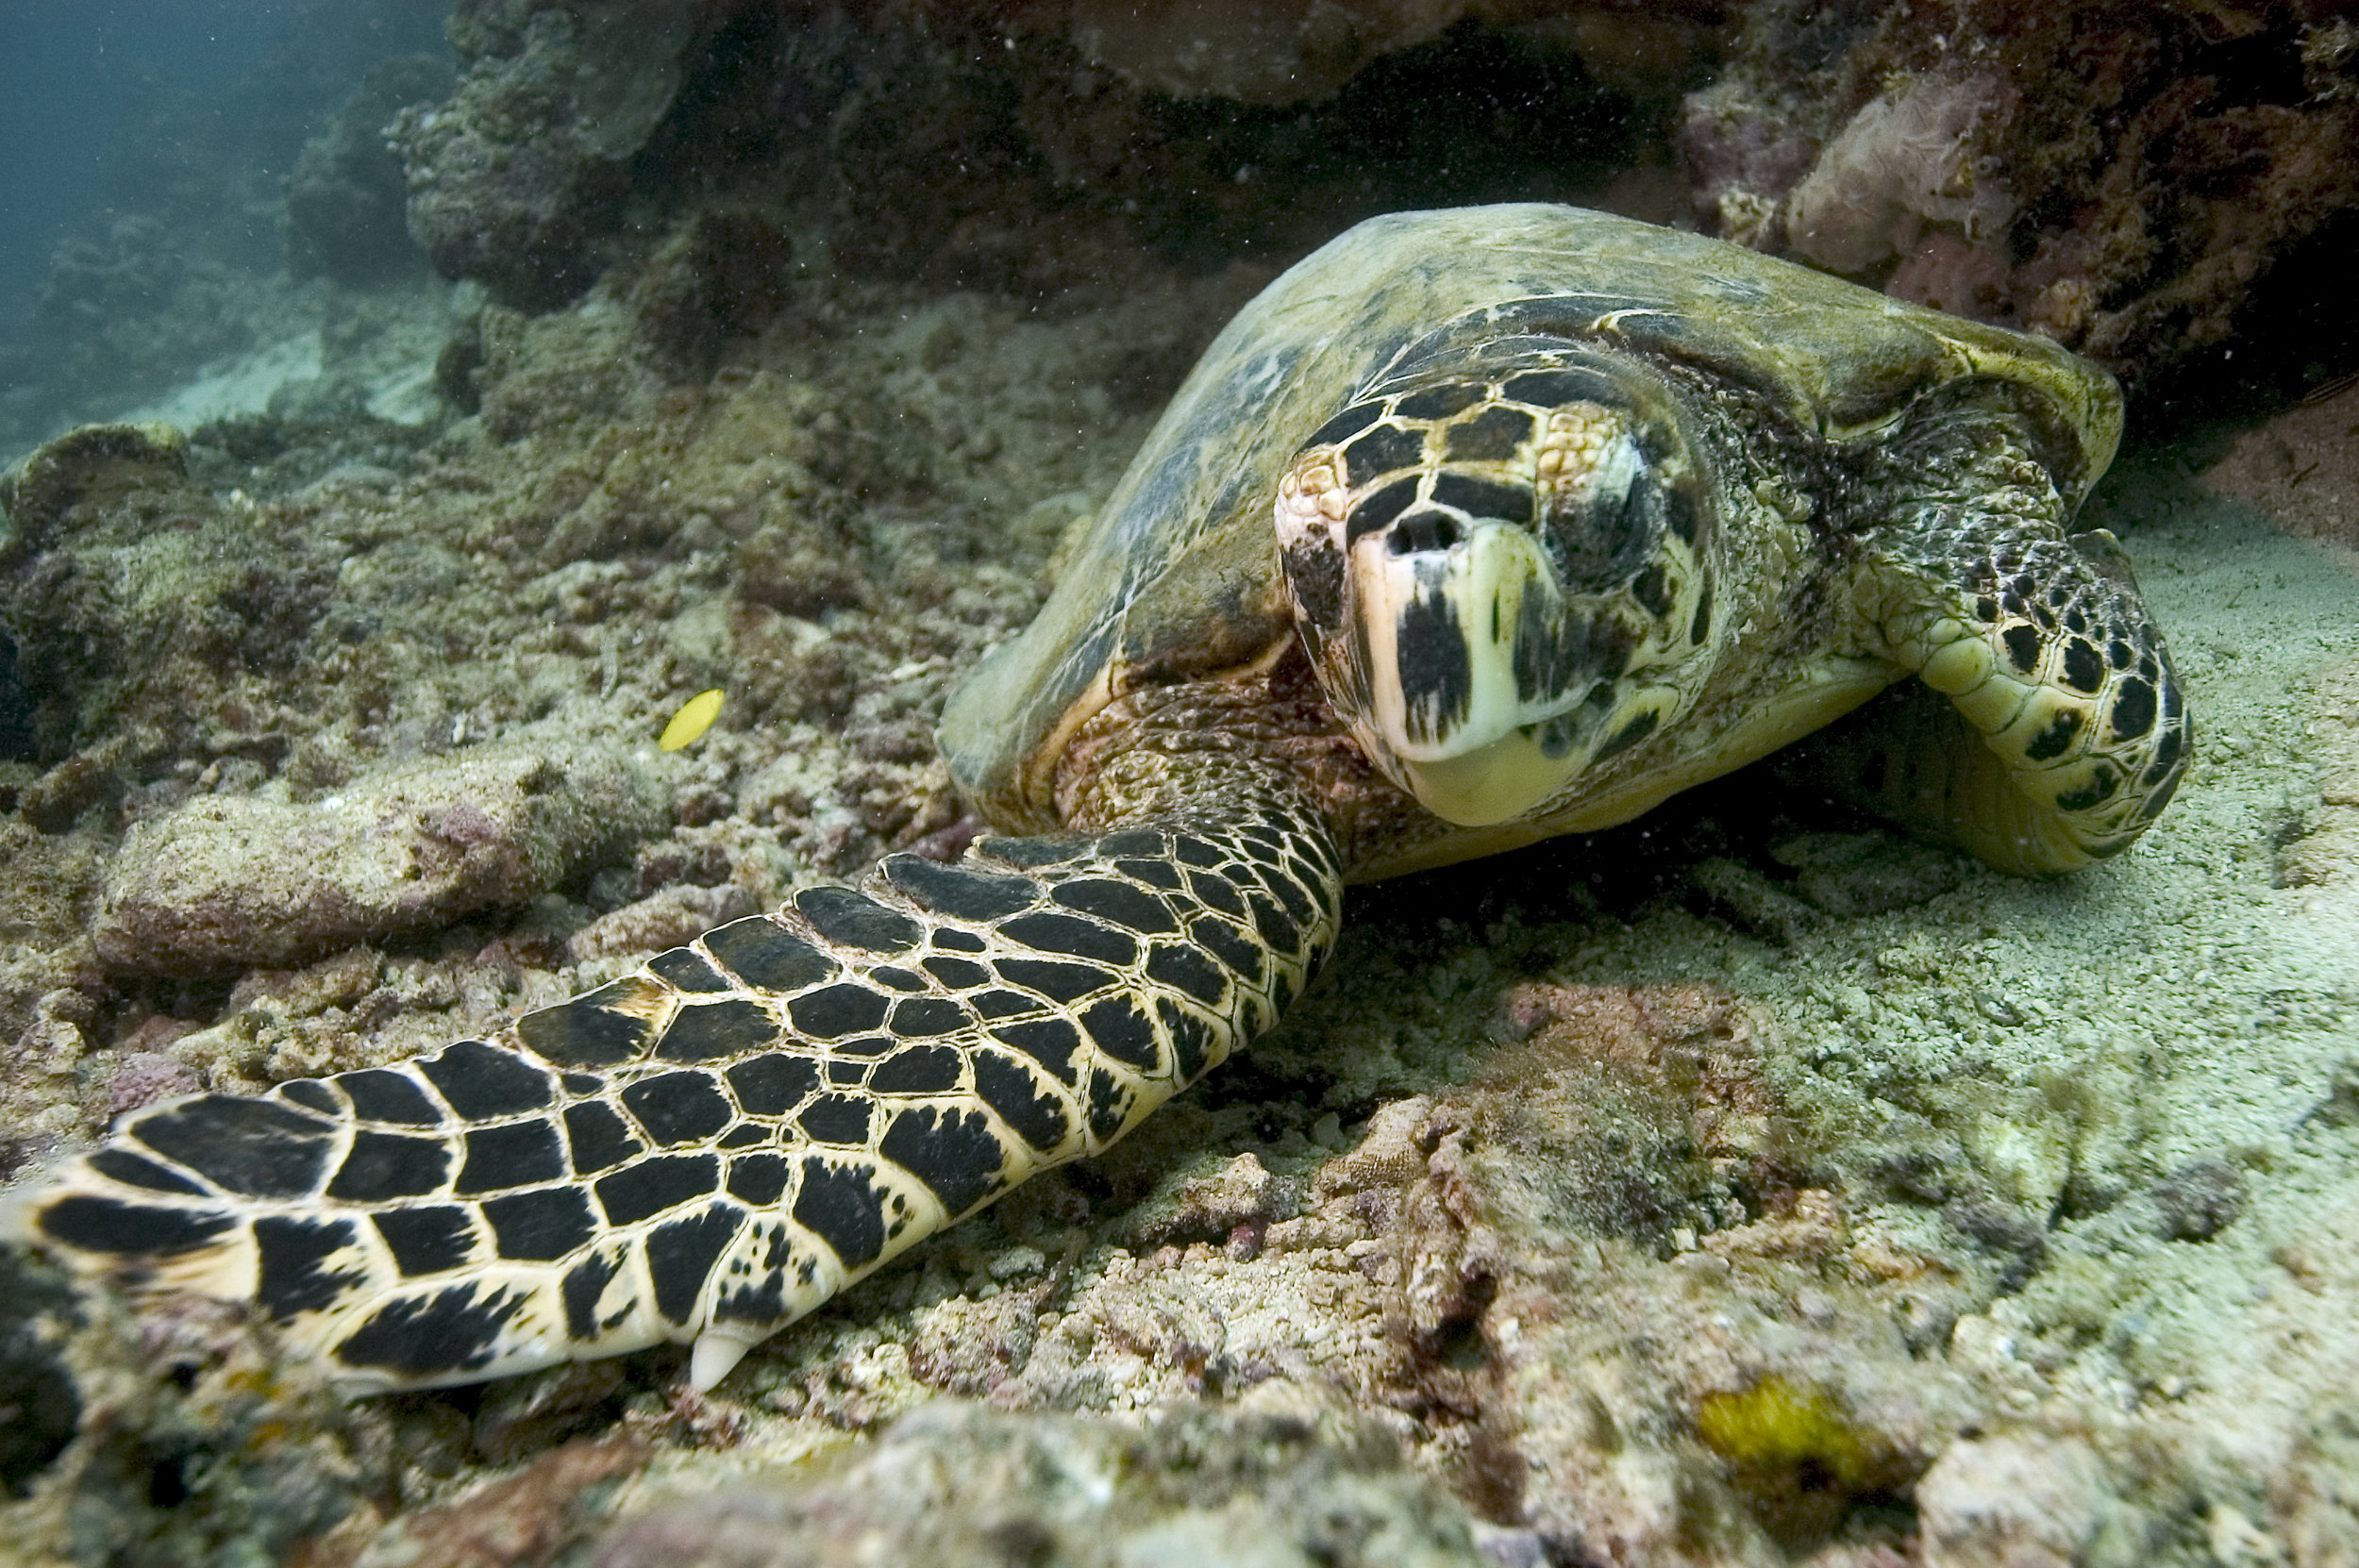  A hawksbill turtle on a reef © Nicolas Pilcher 